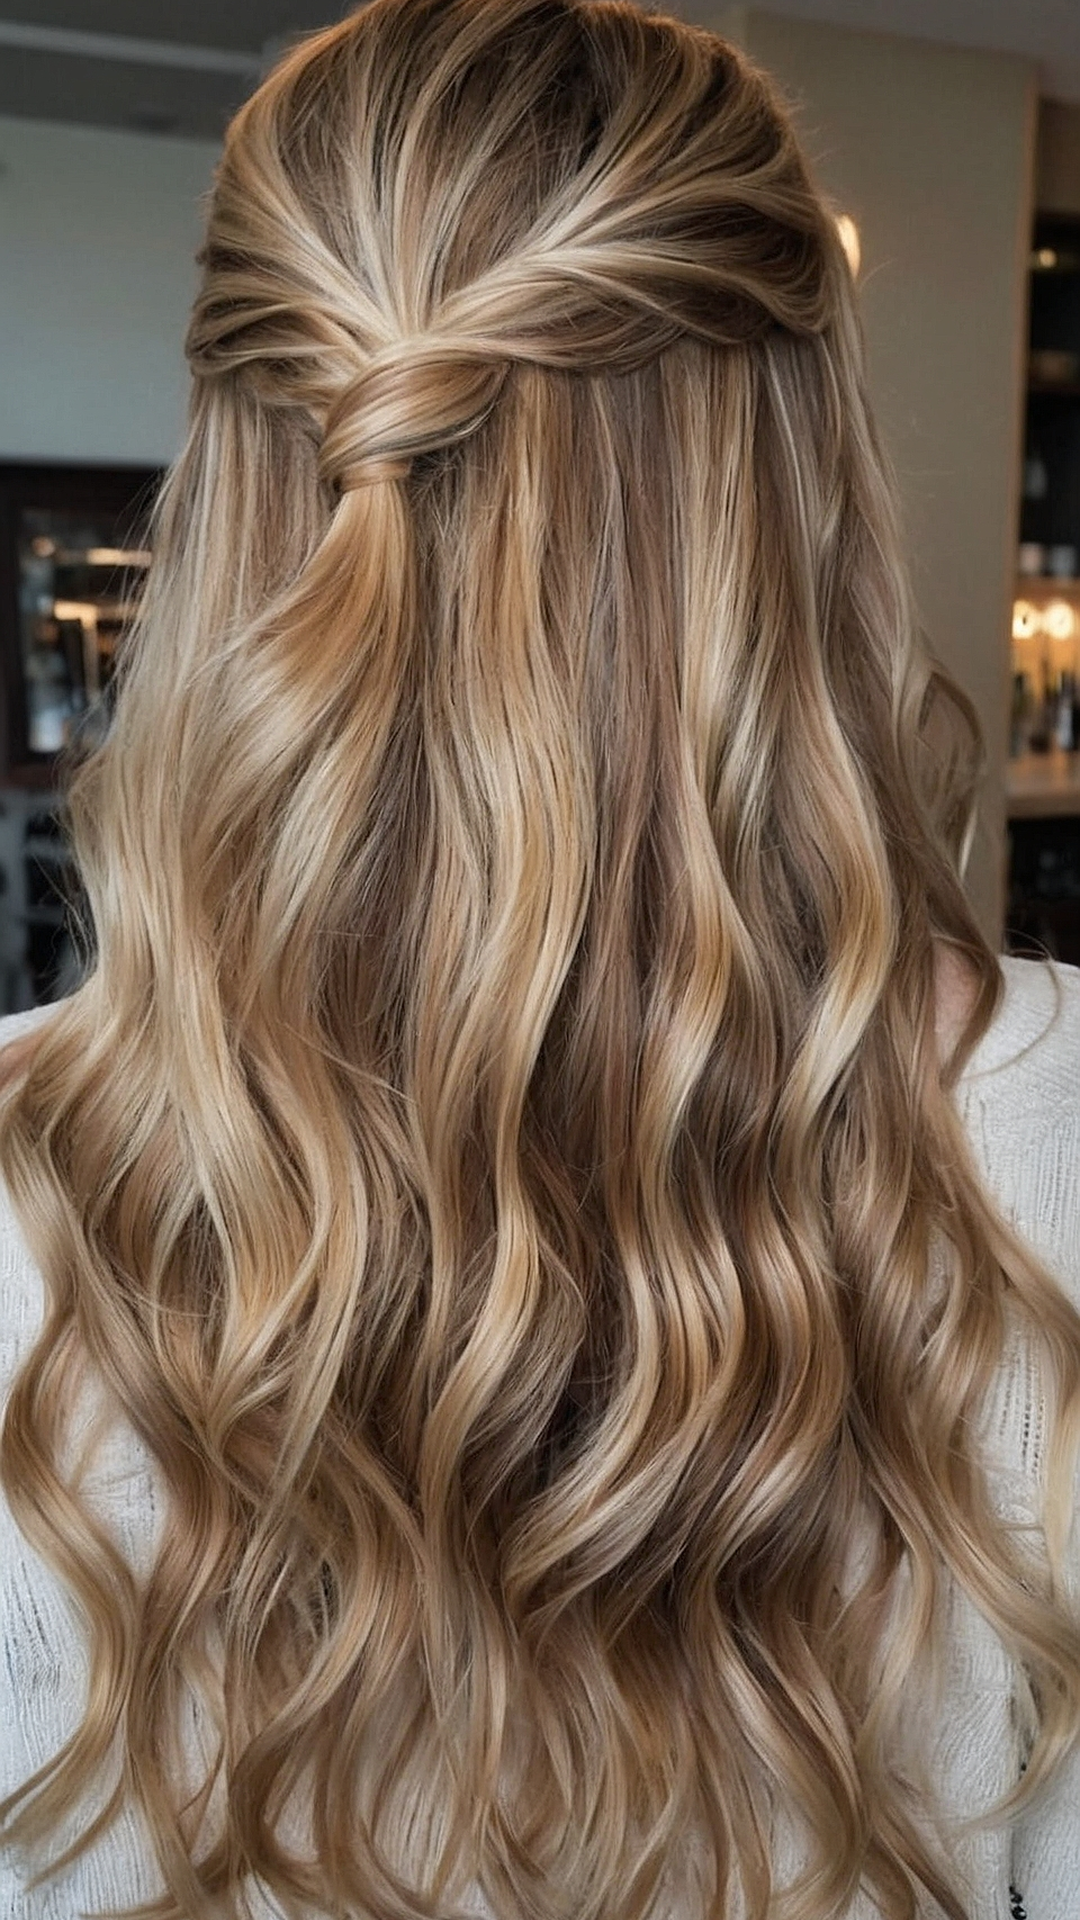 Riding the Waves: Gorgeous Wavy Hair Ideas